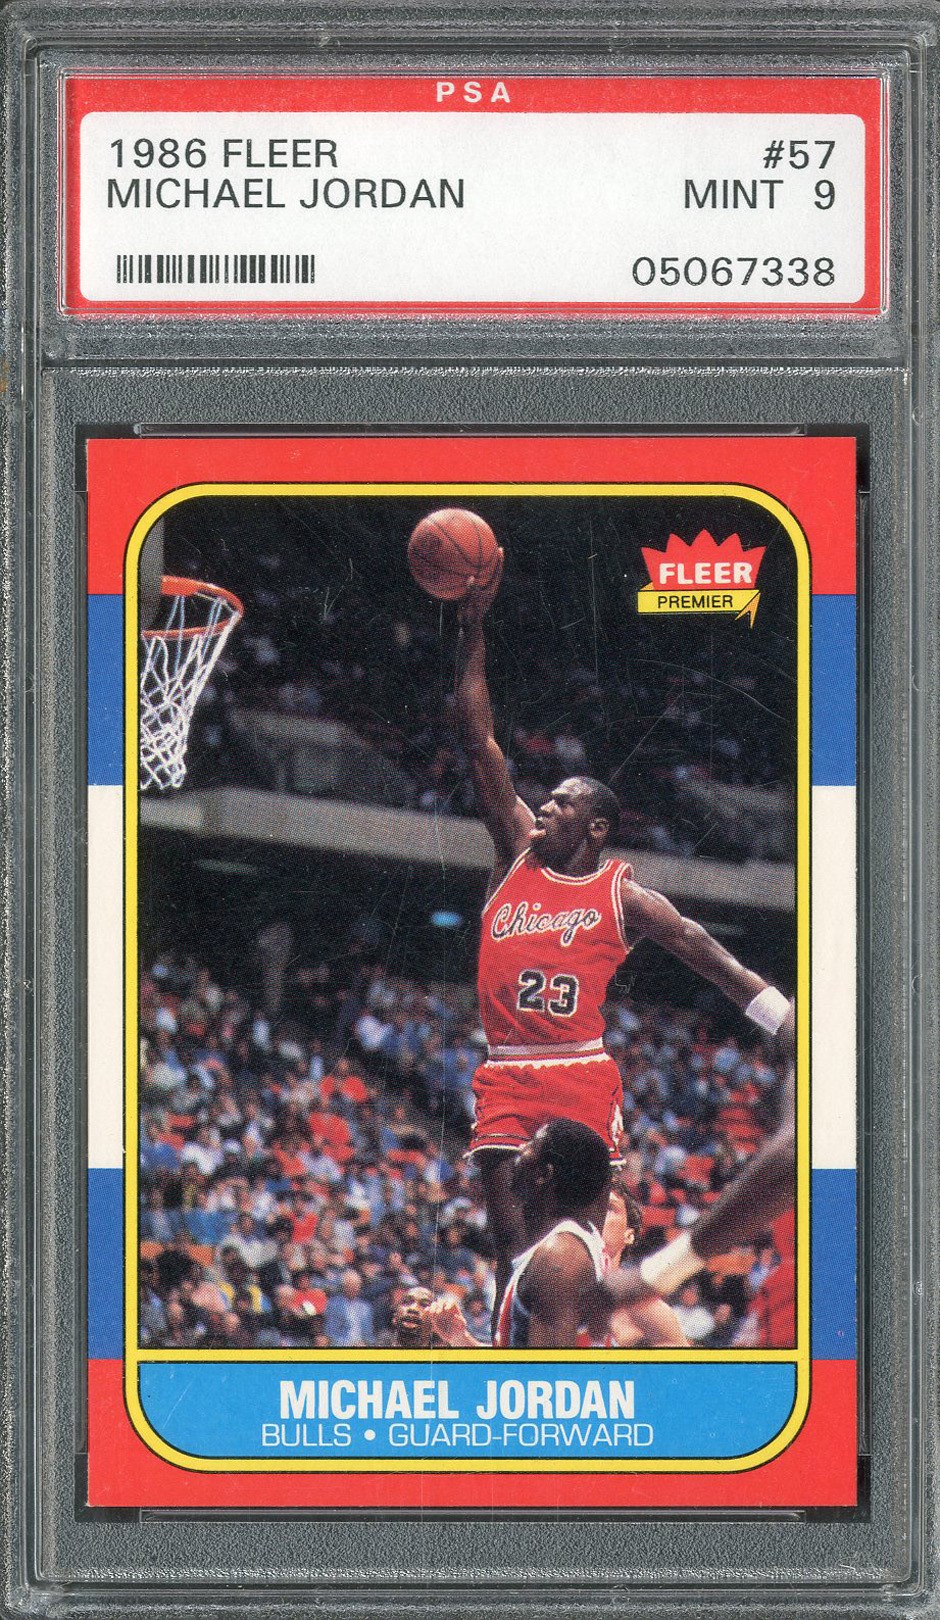 Baseball and Trading Cards - 1986 Fleer Michael Jordan #57 Rookie PSA MINT 9